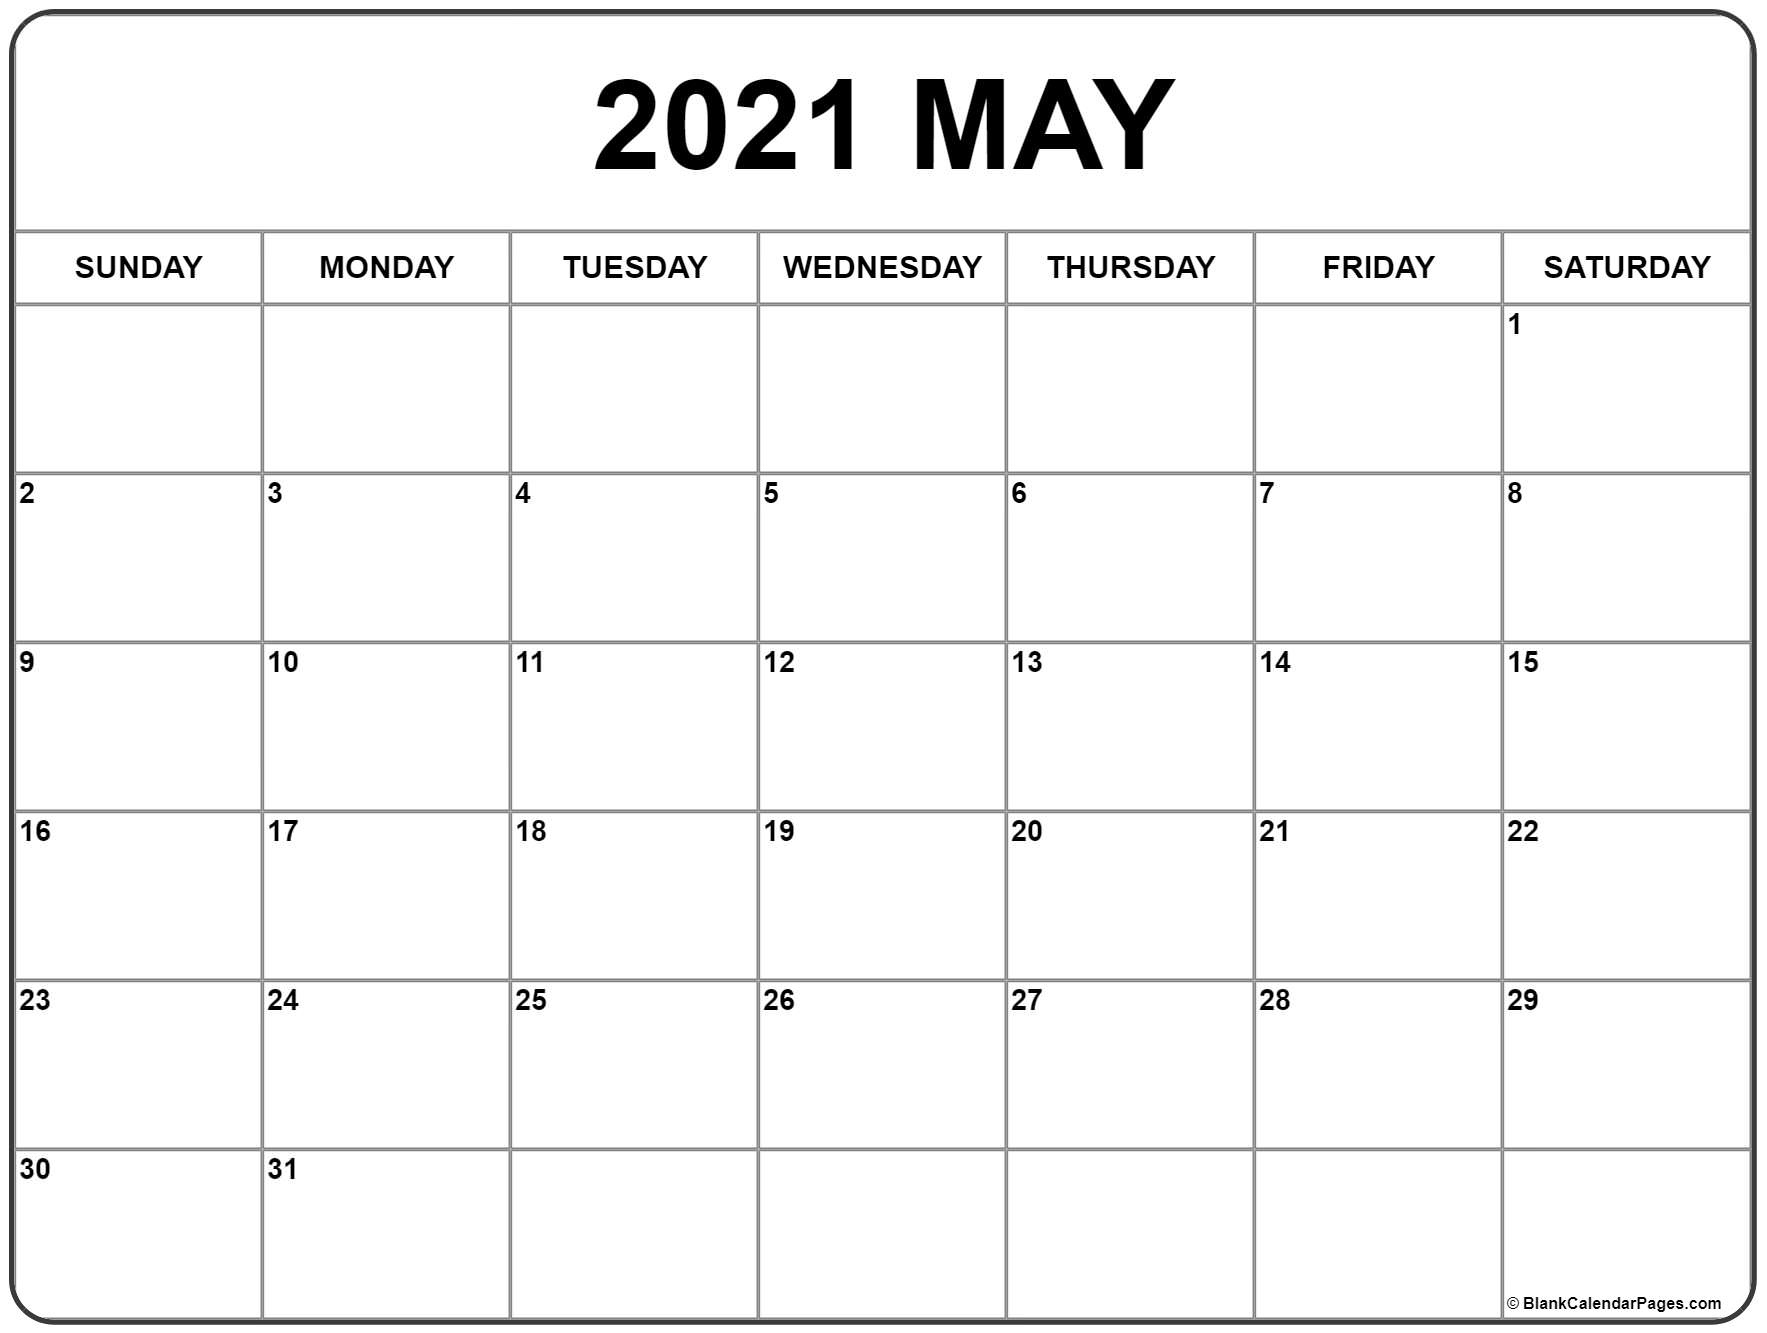 May 2021 Calendar | Free Printable Monthly Calendars May 2021 Calendar